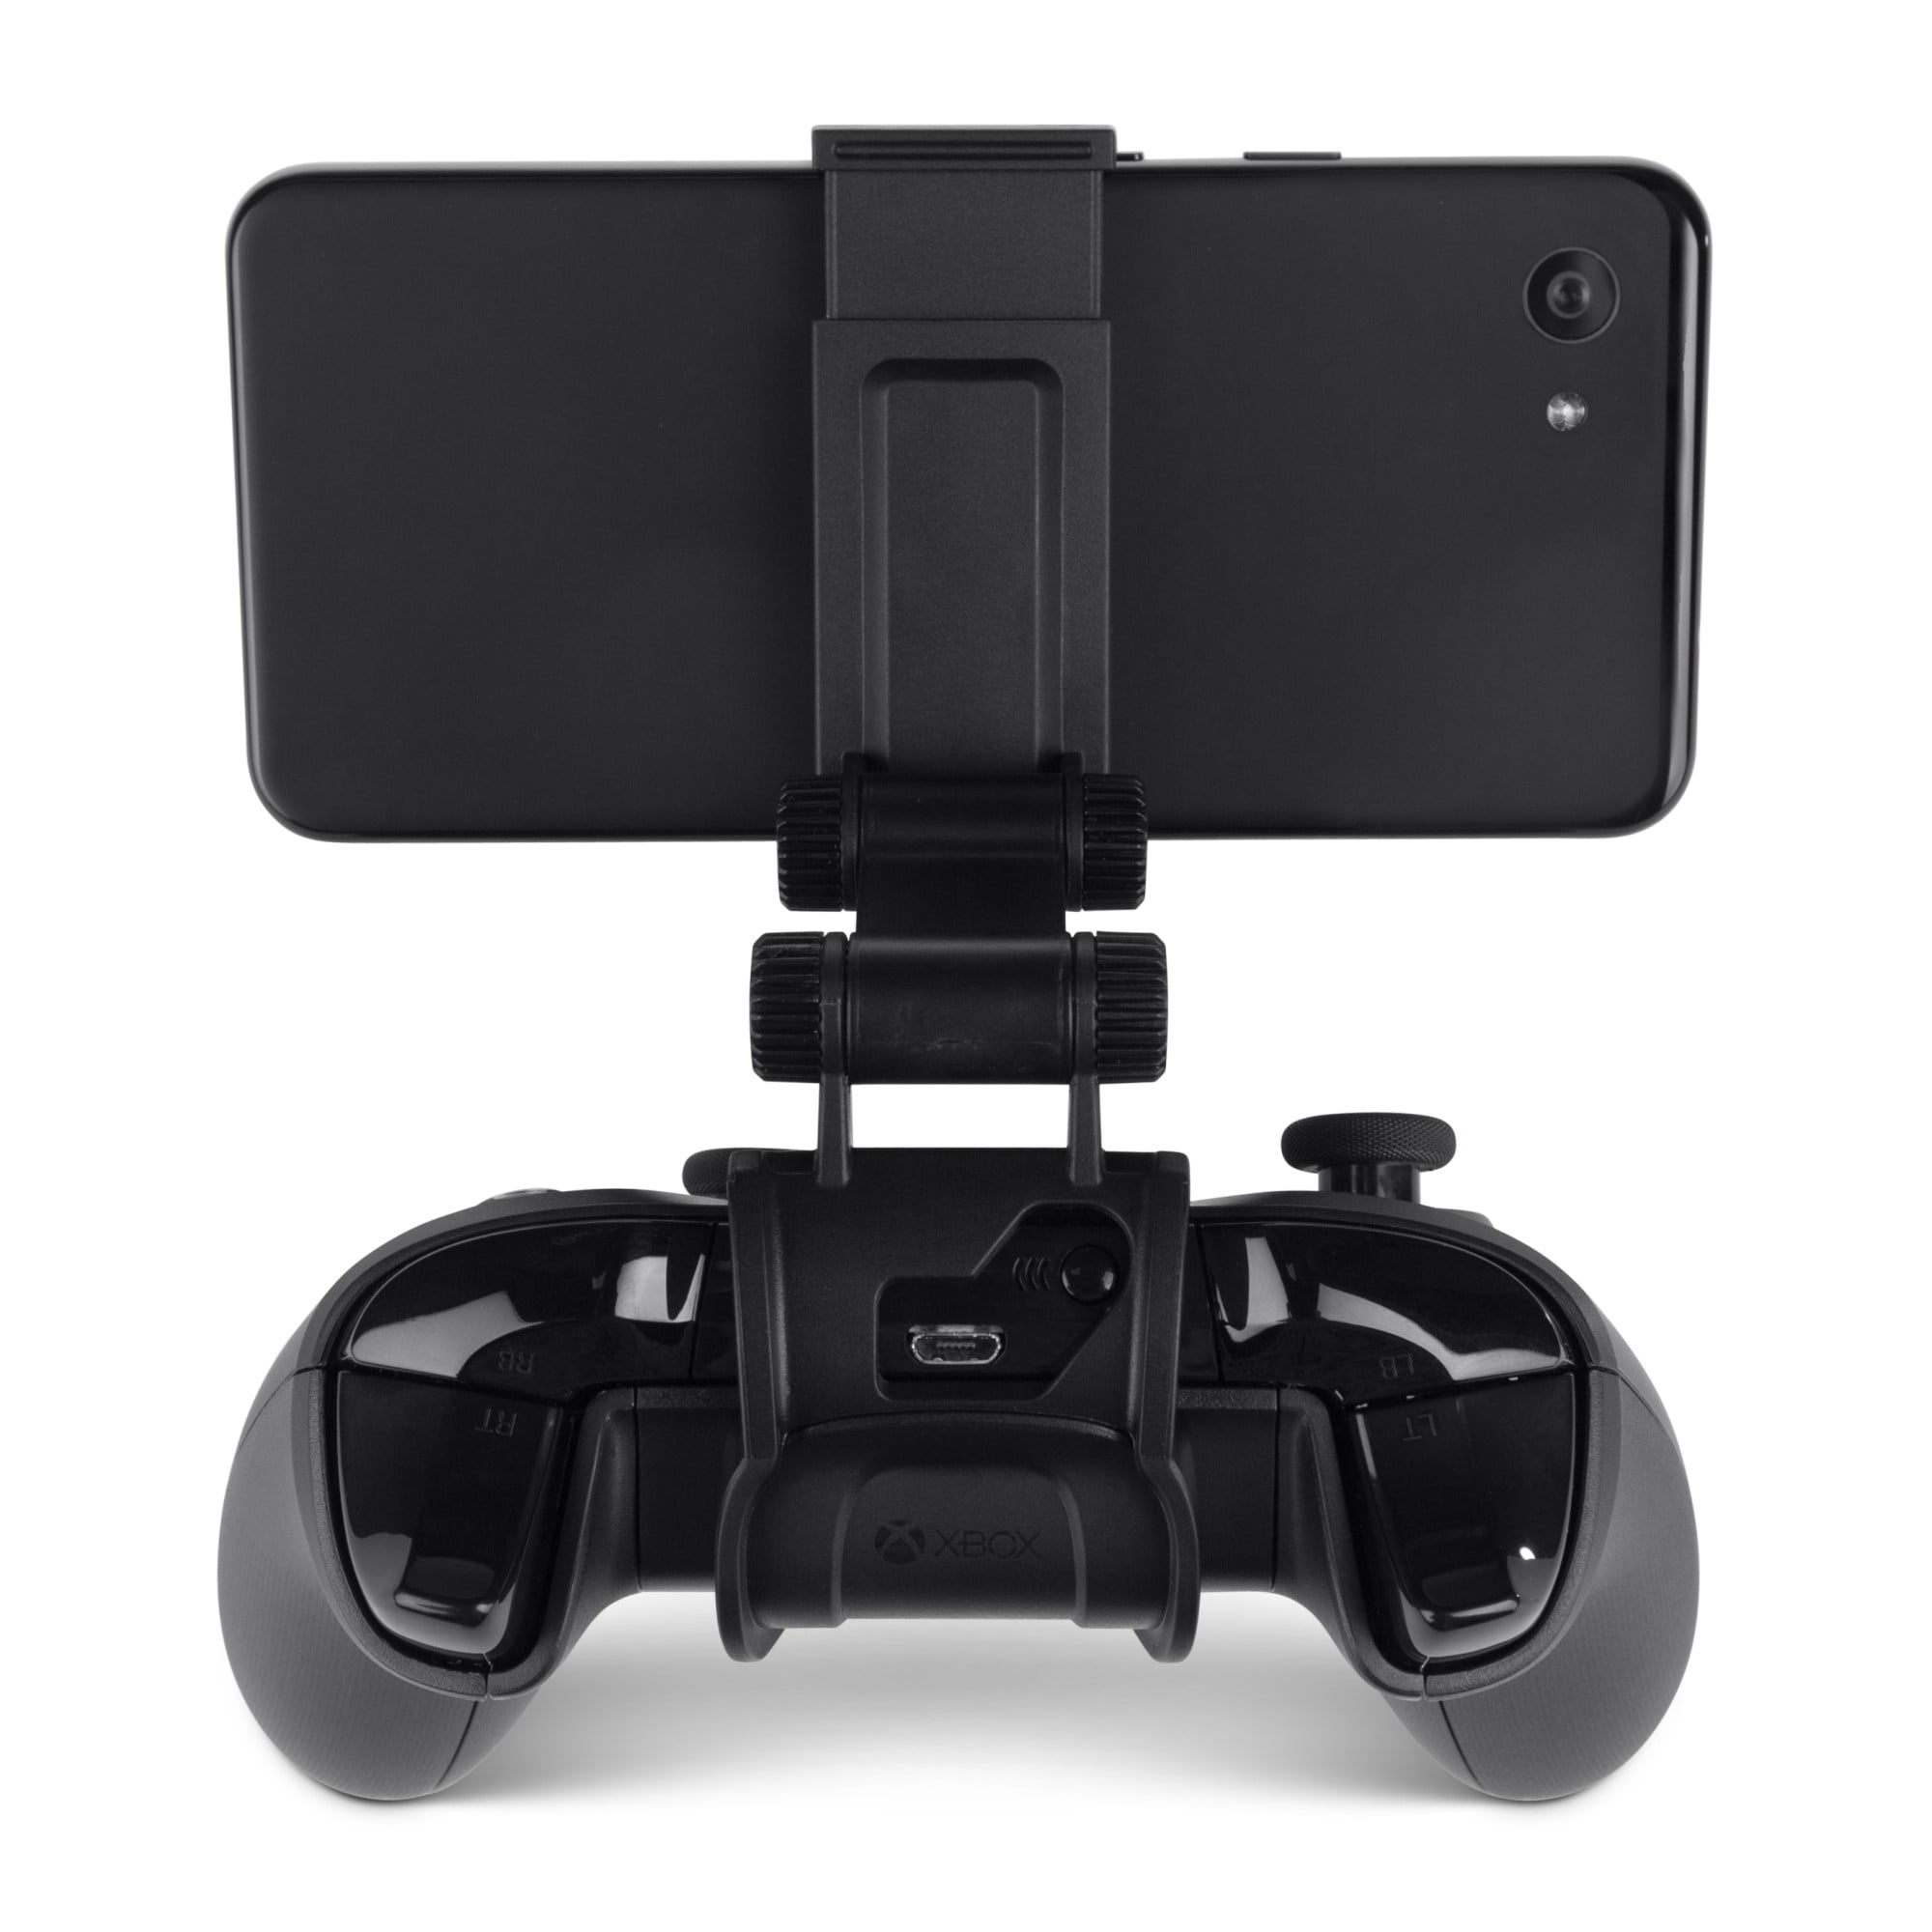 noodzaak regel Kardinaal PowerA MOGA Mobile Gaming Clip for Xbox One Controllers - Walmart.com